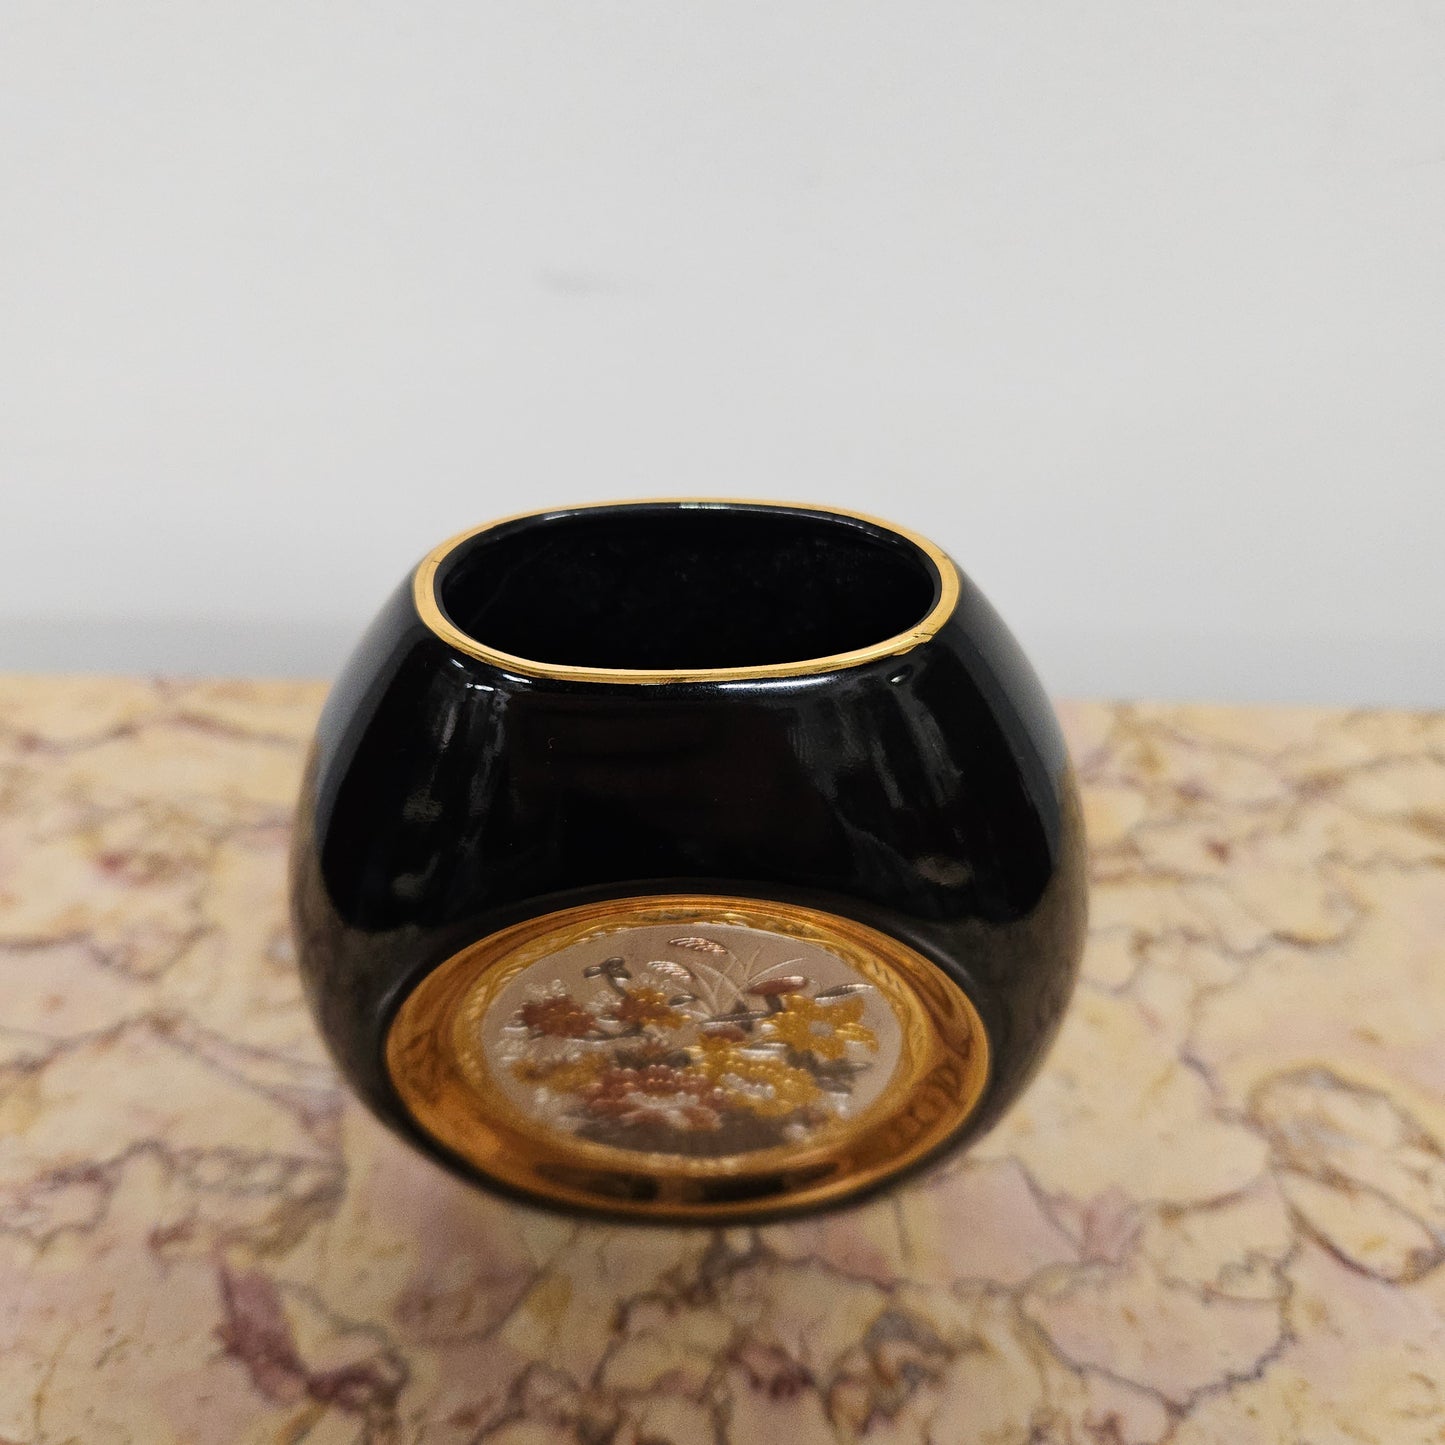 Japanese 'The Art of Chokin' Vase